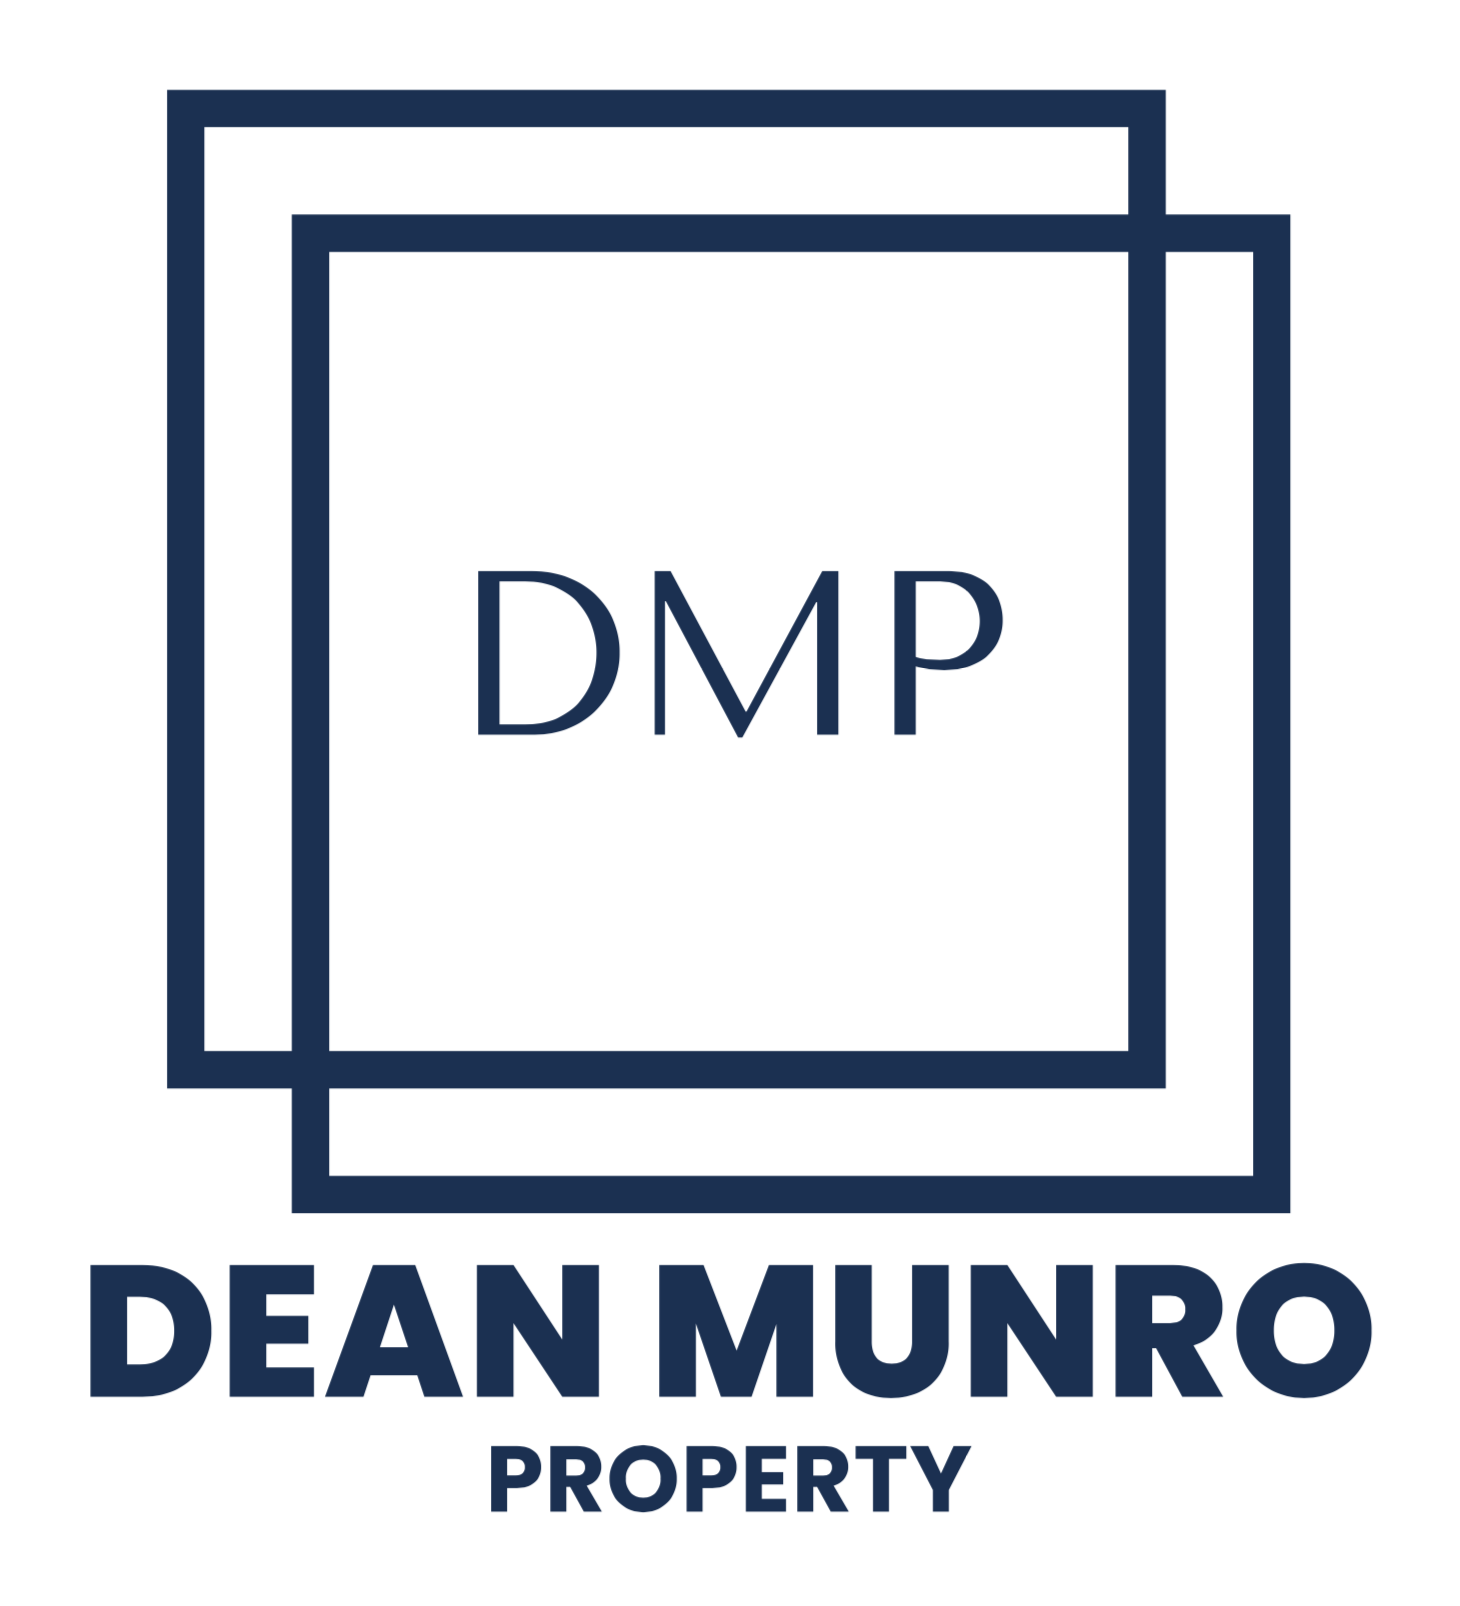 Dean Munro Property